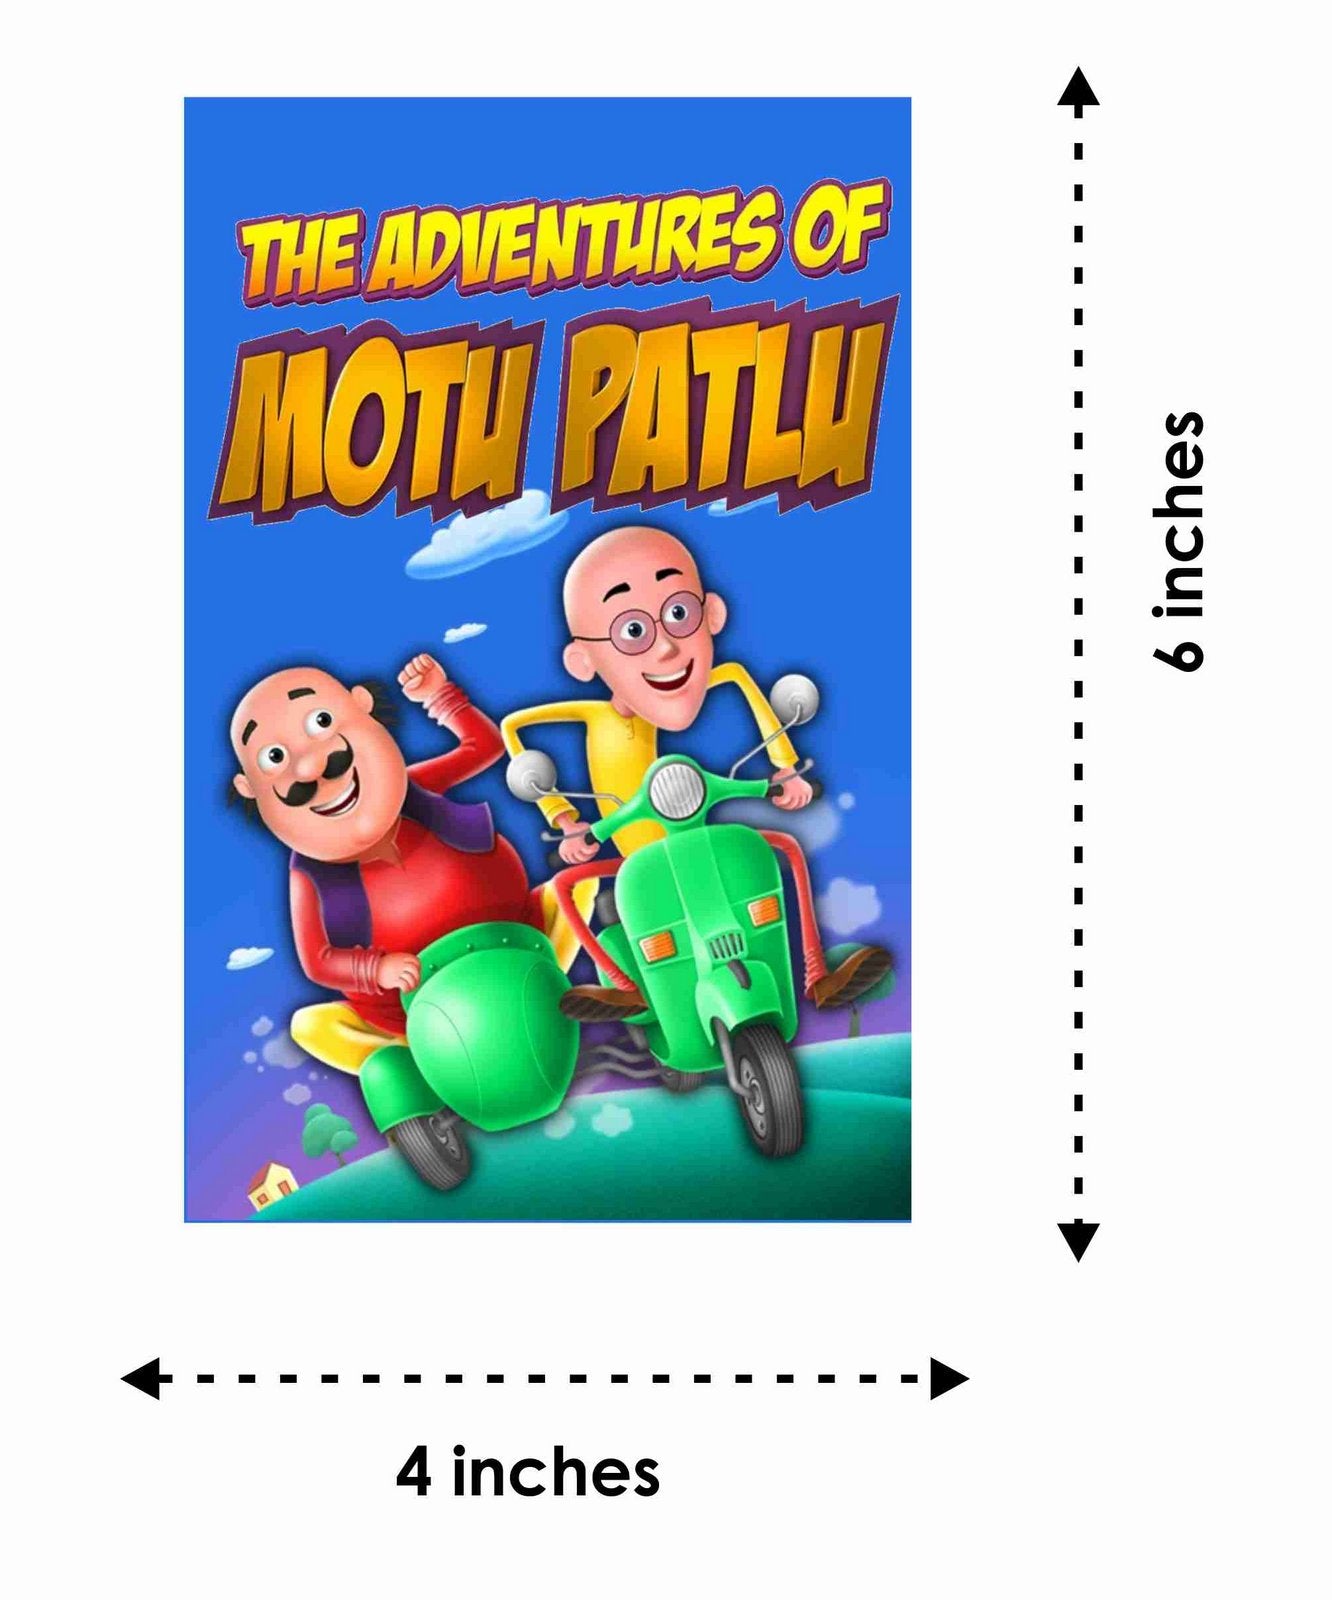 Motu Patlu Theme Children's Birthday Party Invitations Cards with Envelopes - Kids Birthday Party Invitations for Boys or Girls,- Invitation Cards (Pack of 10)